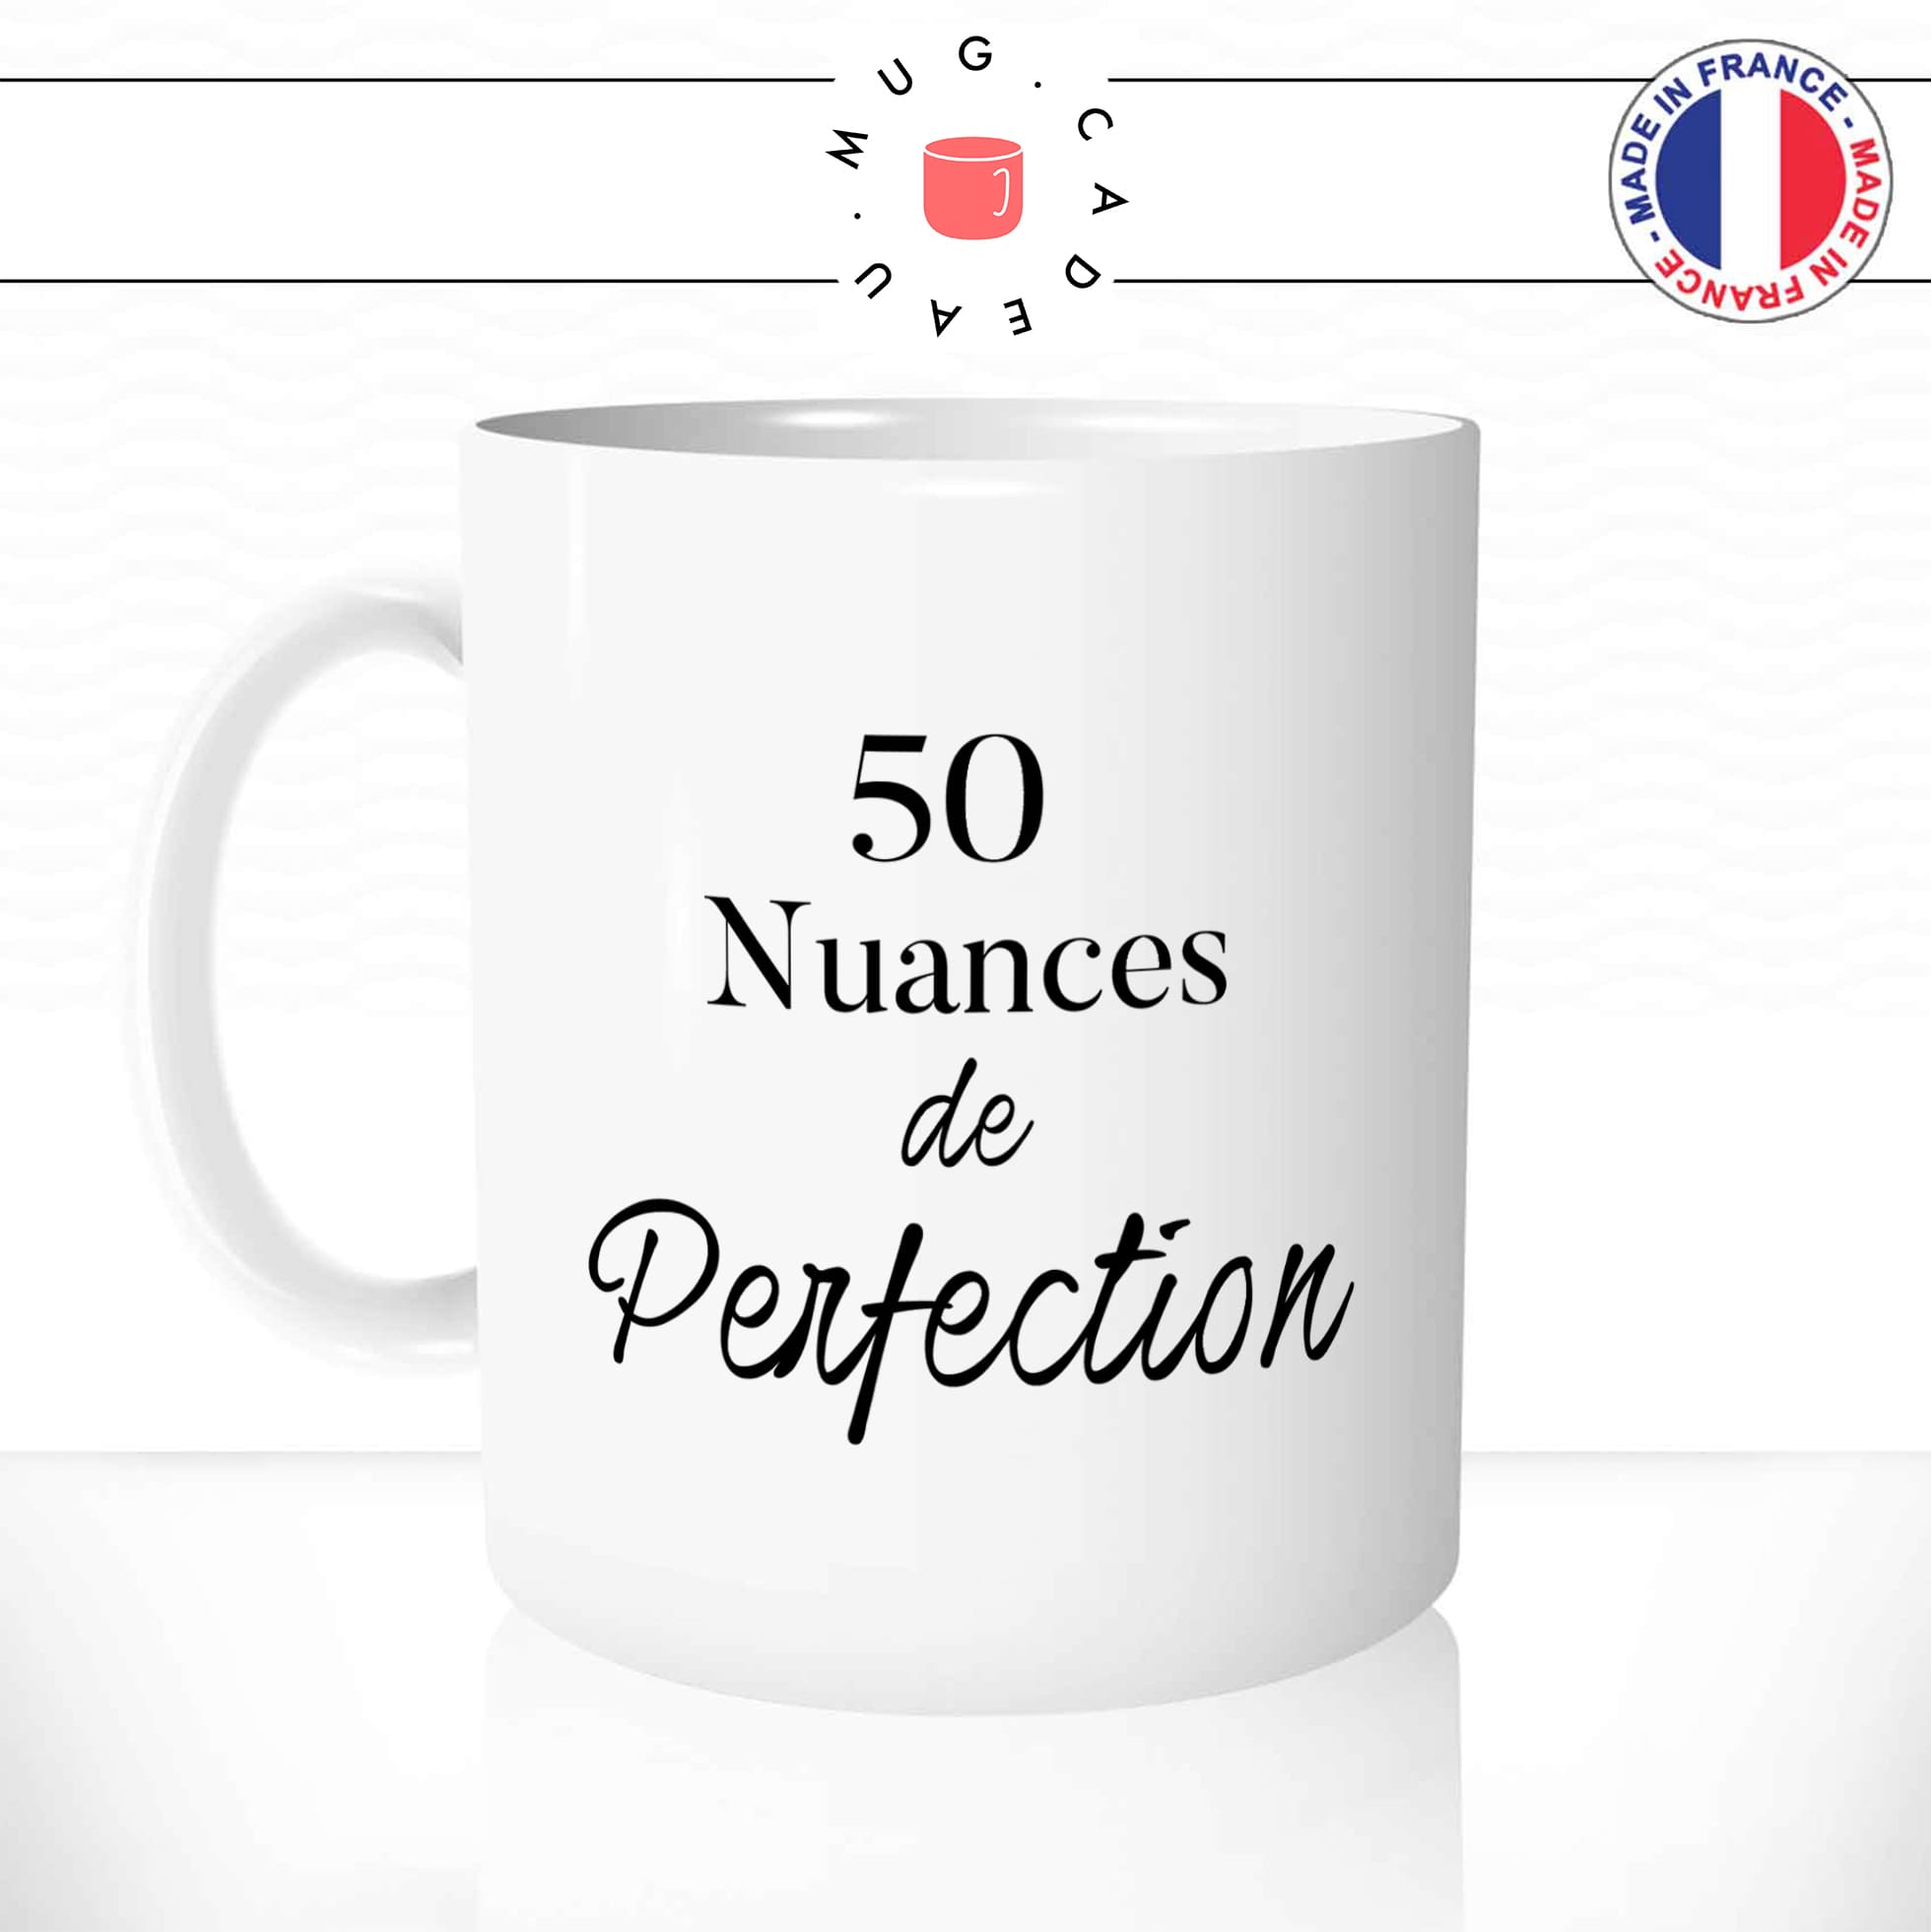 Mug 50 Nuances de Perfection